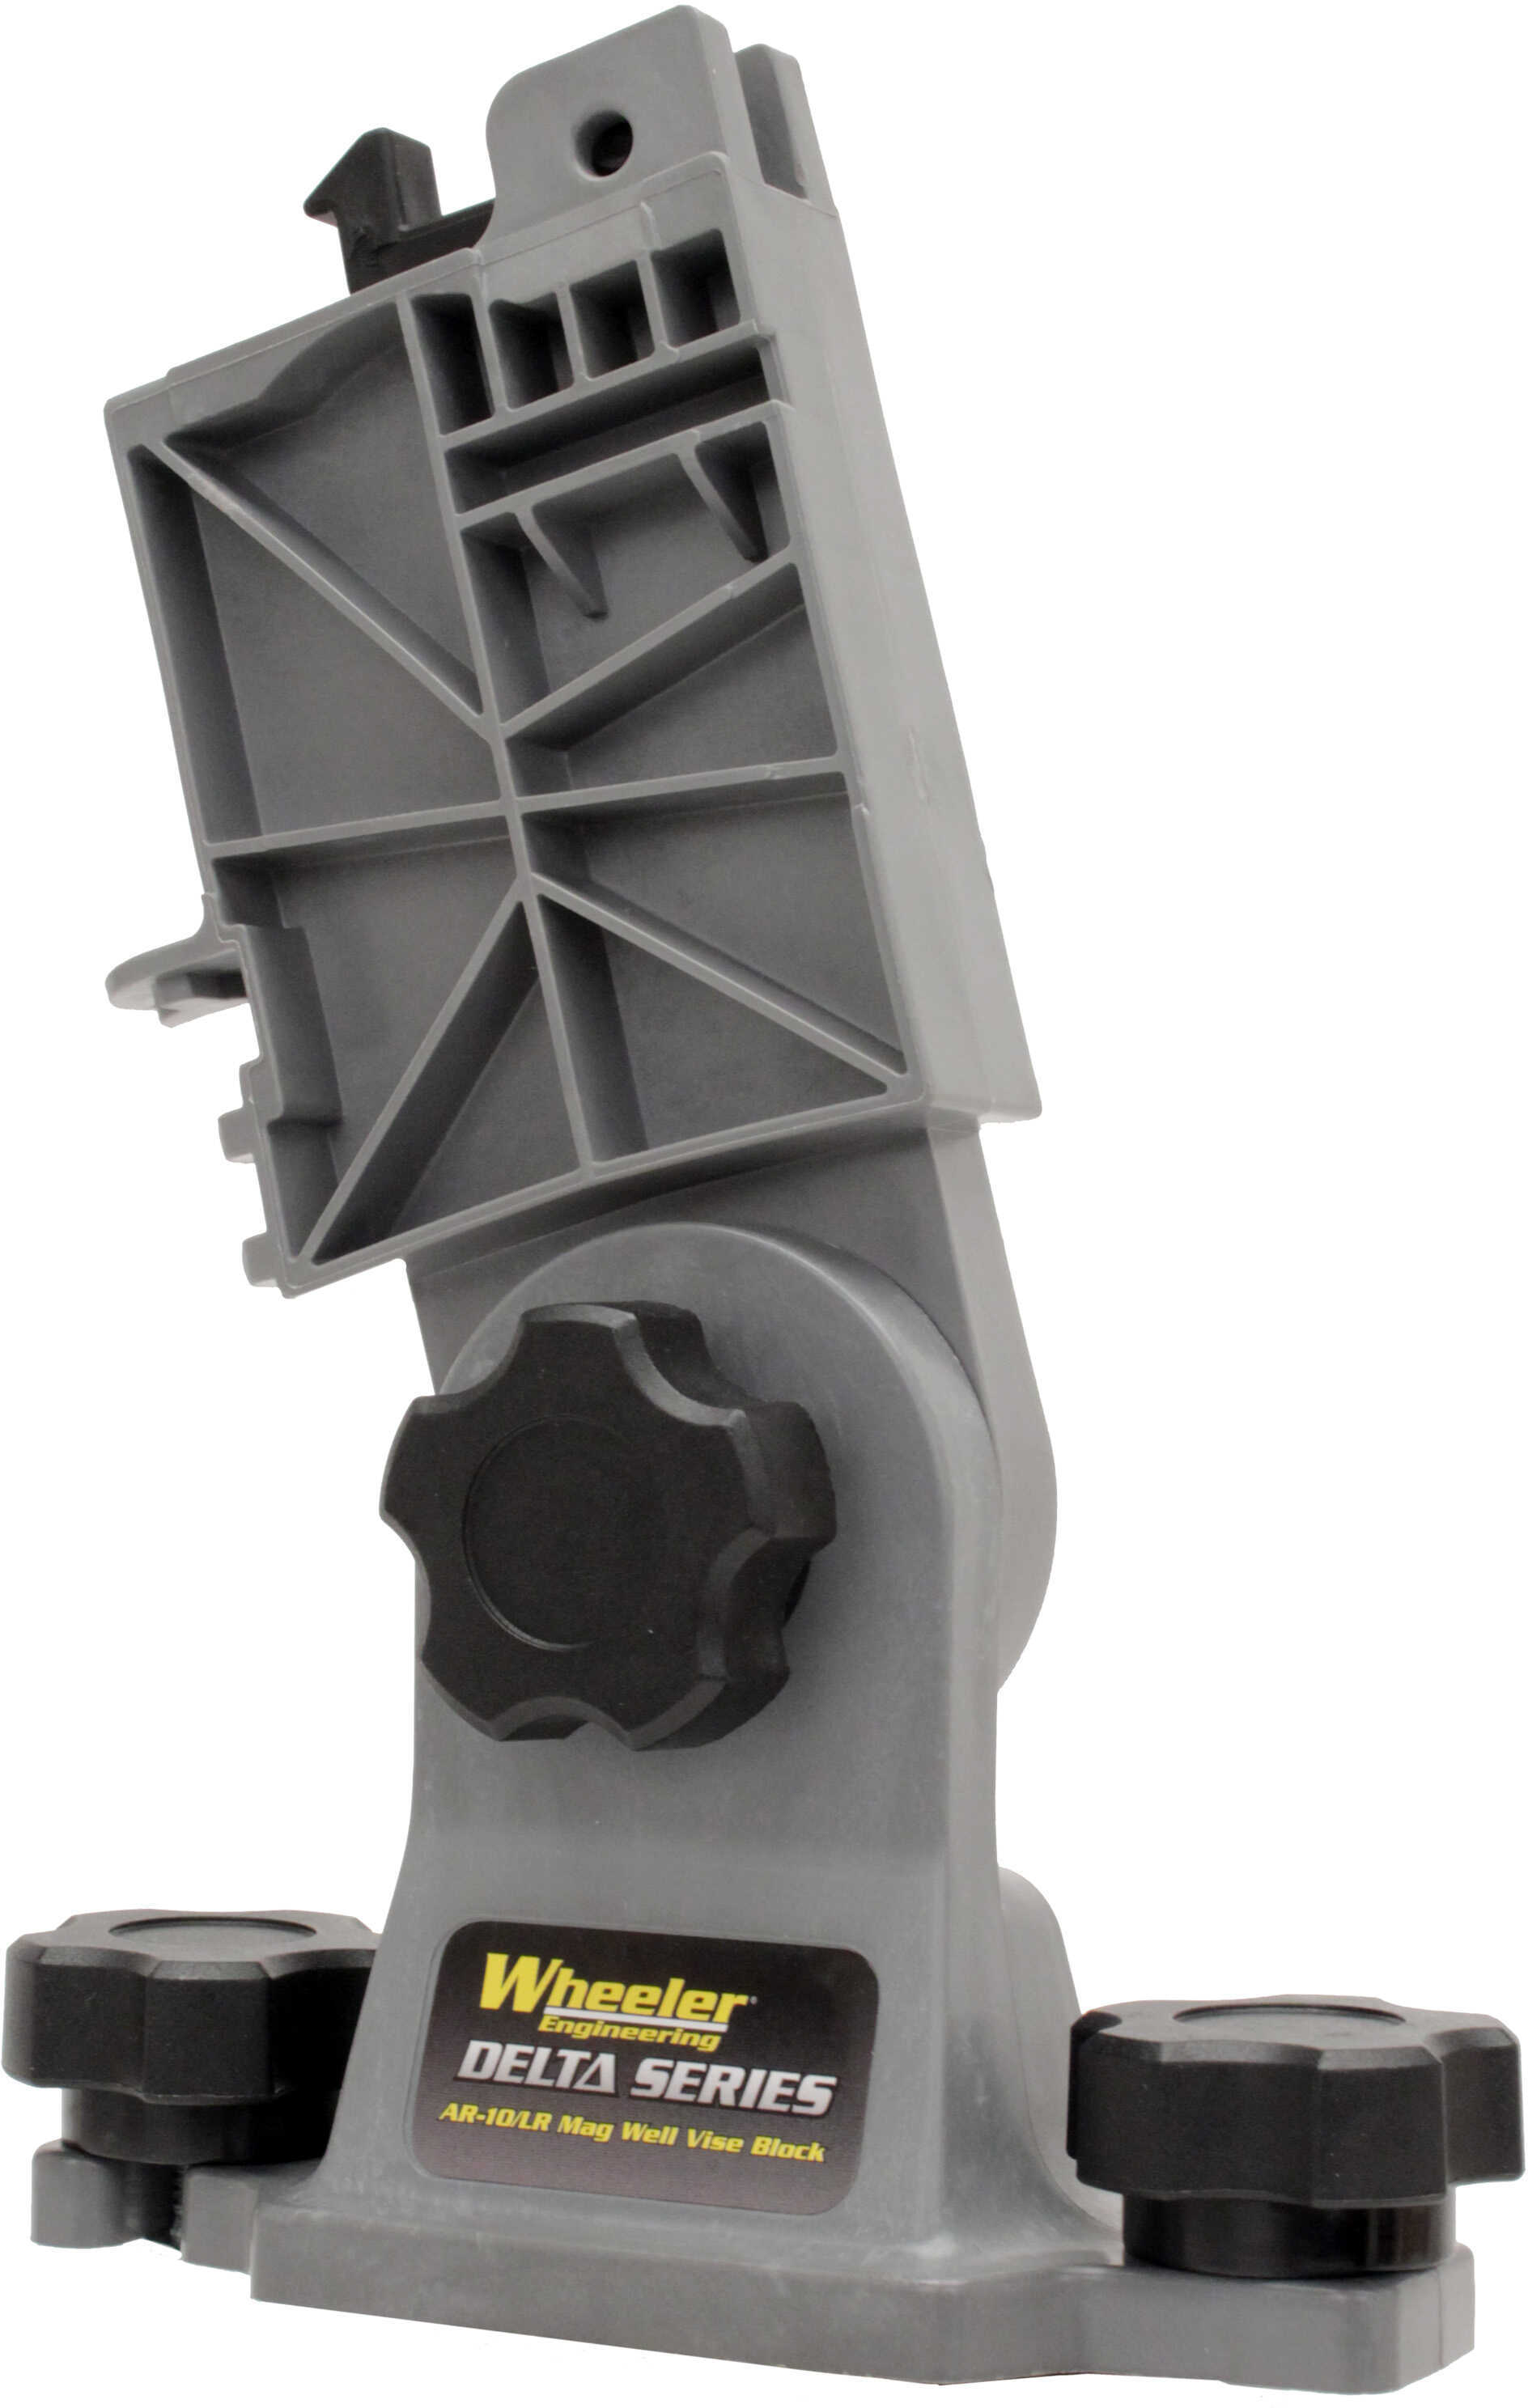 Wheeler Delta Series Tool Bench Vise Block For AR-10 146200